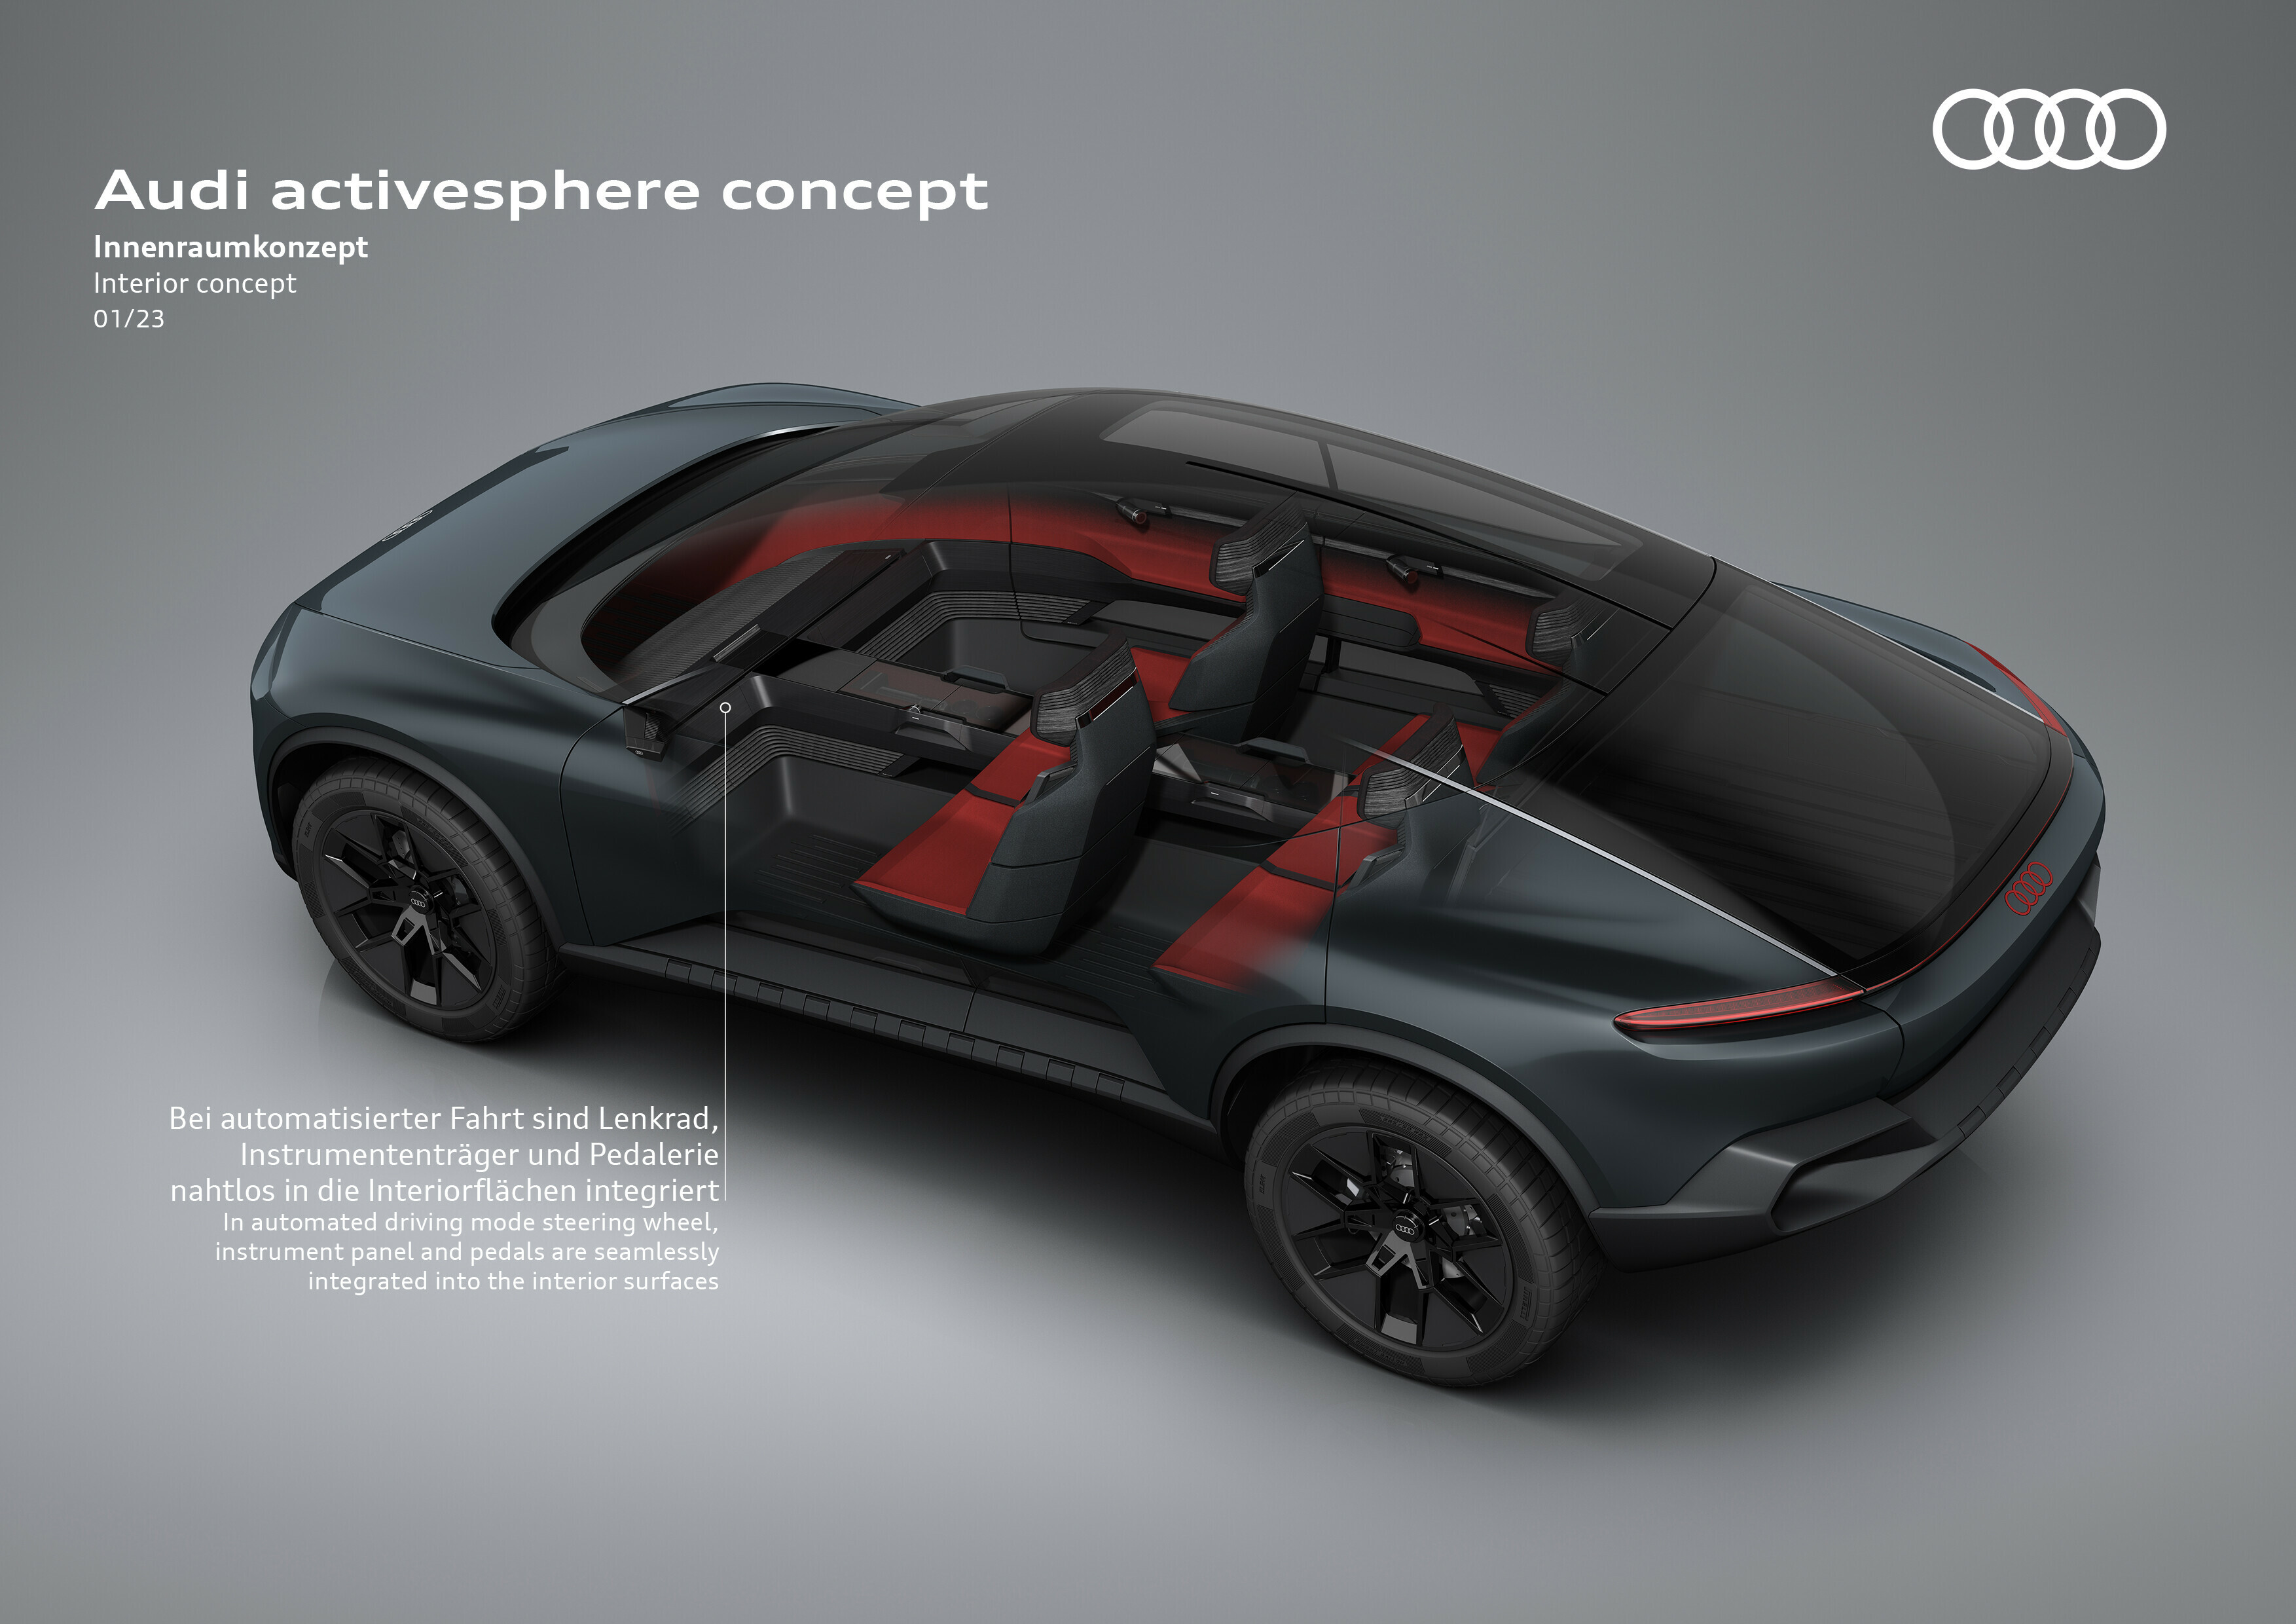 Audi activesphere concept, 2023 – Interior concept